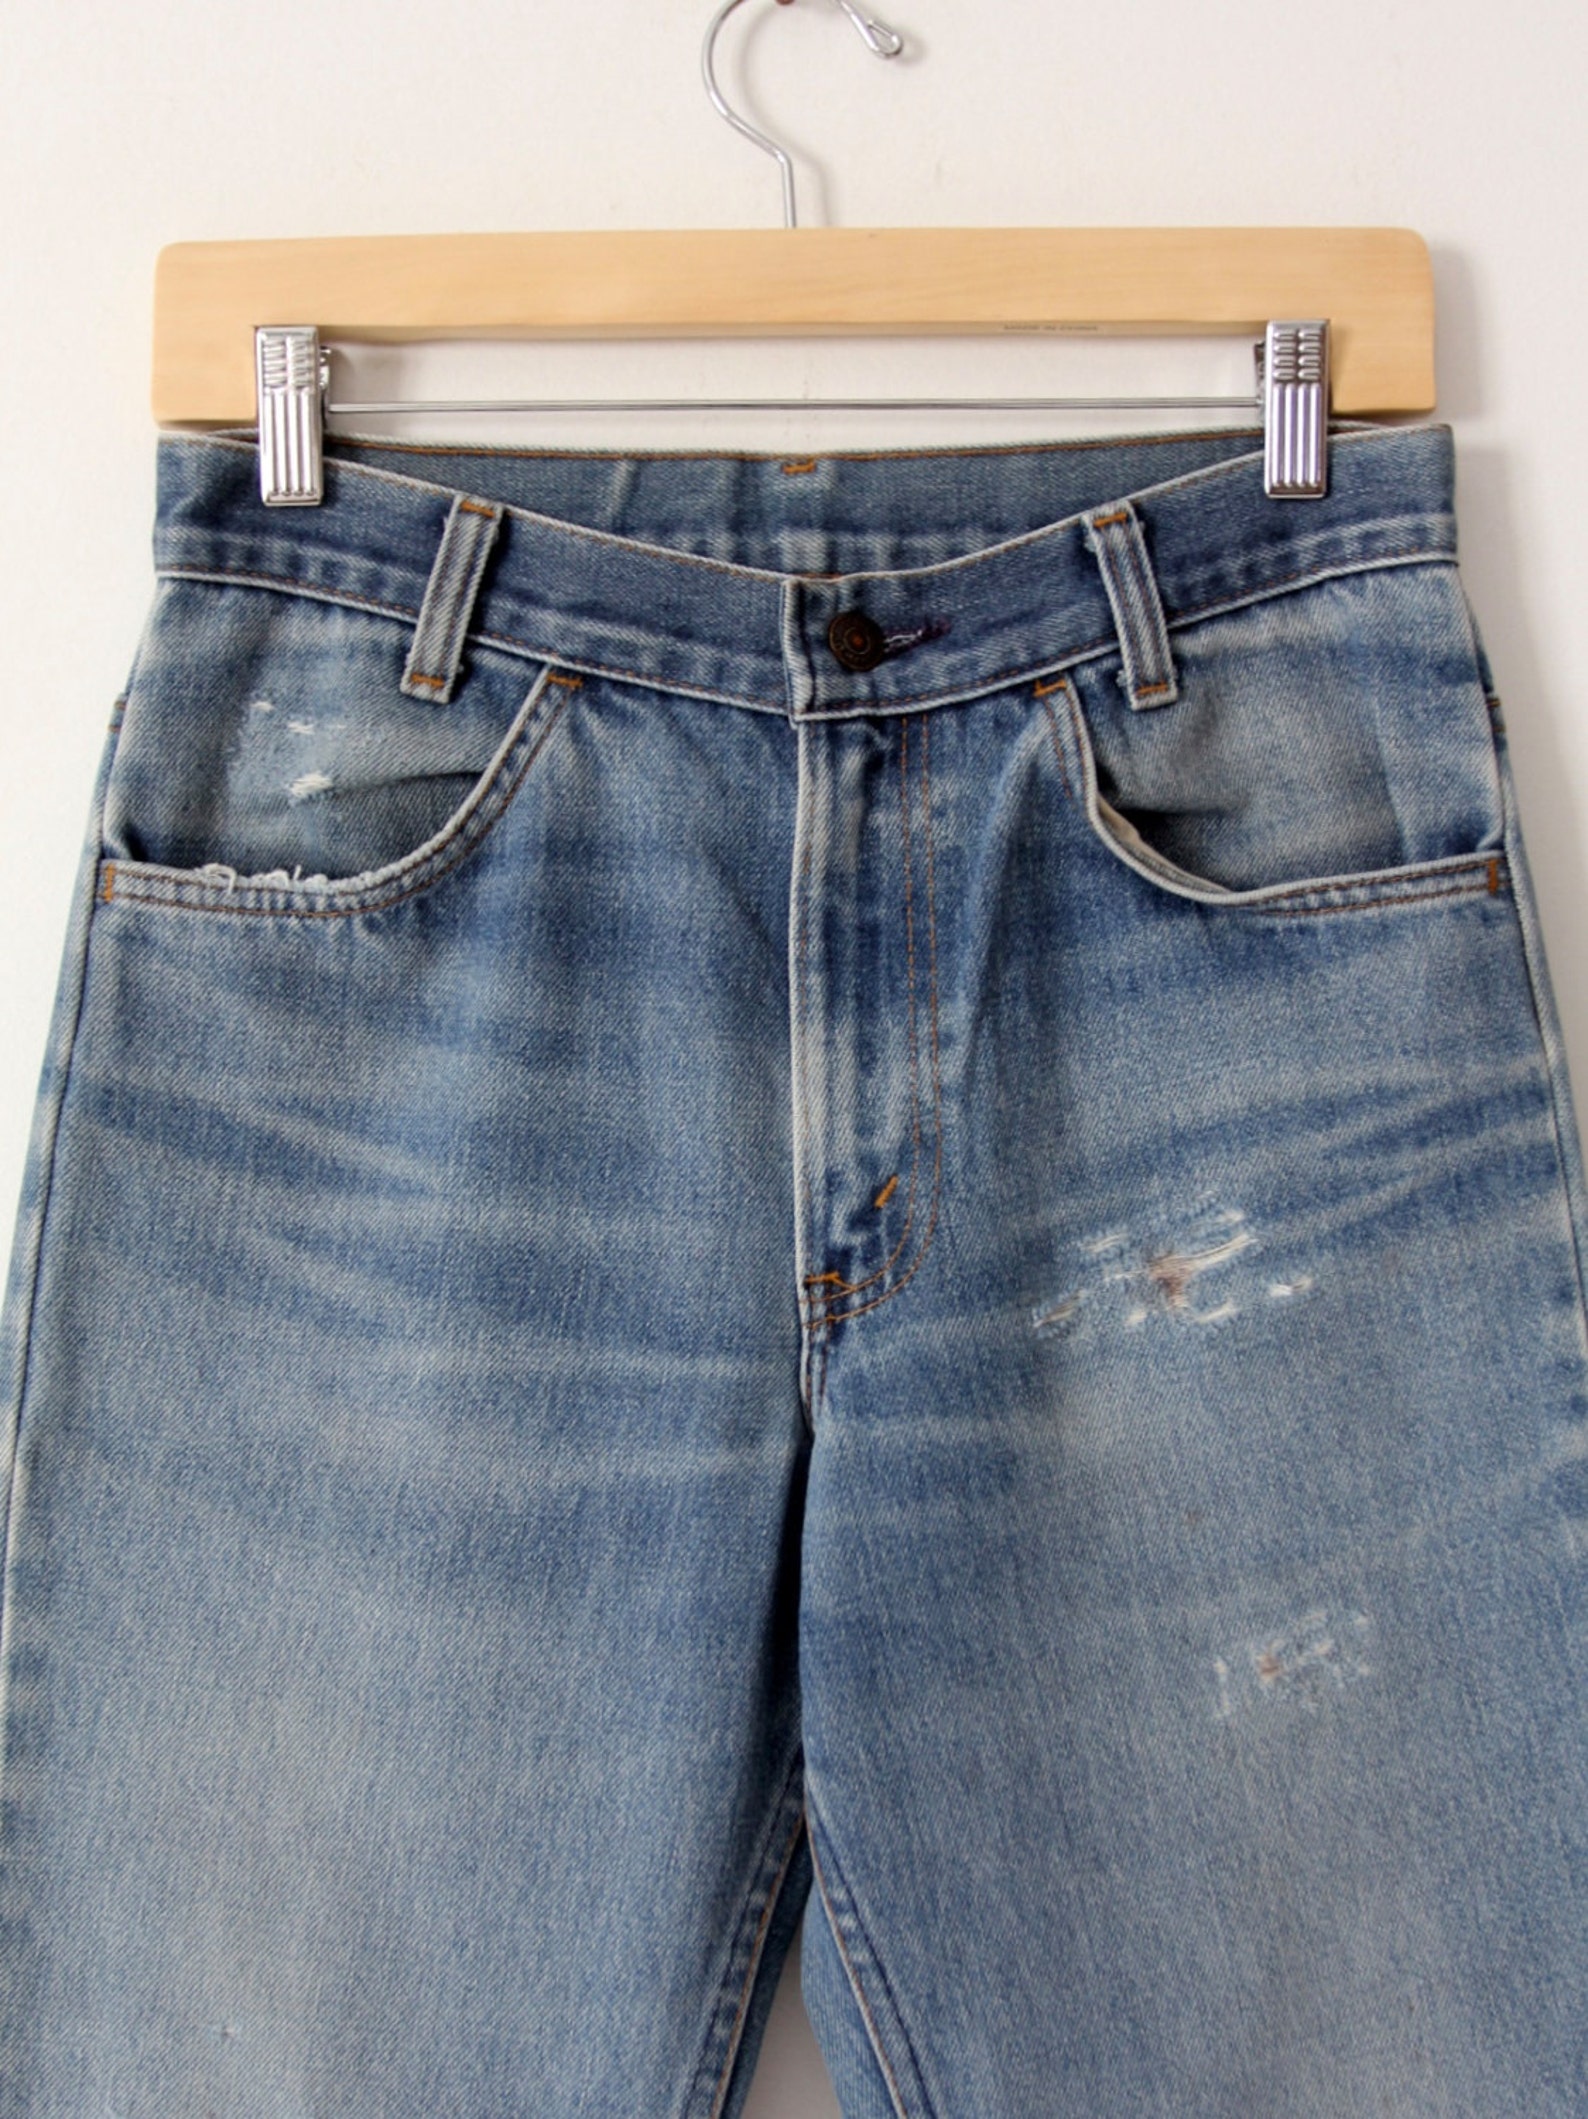 1970s Levis jeans vintage boot cut denim orange tab 29 x 30 | Etsy